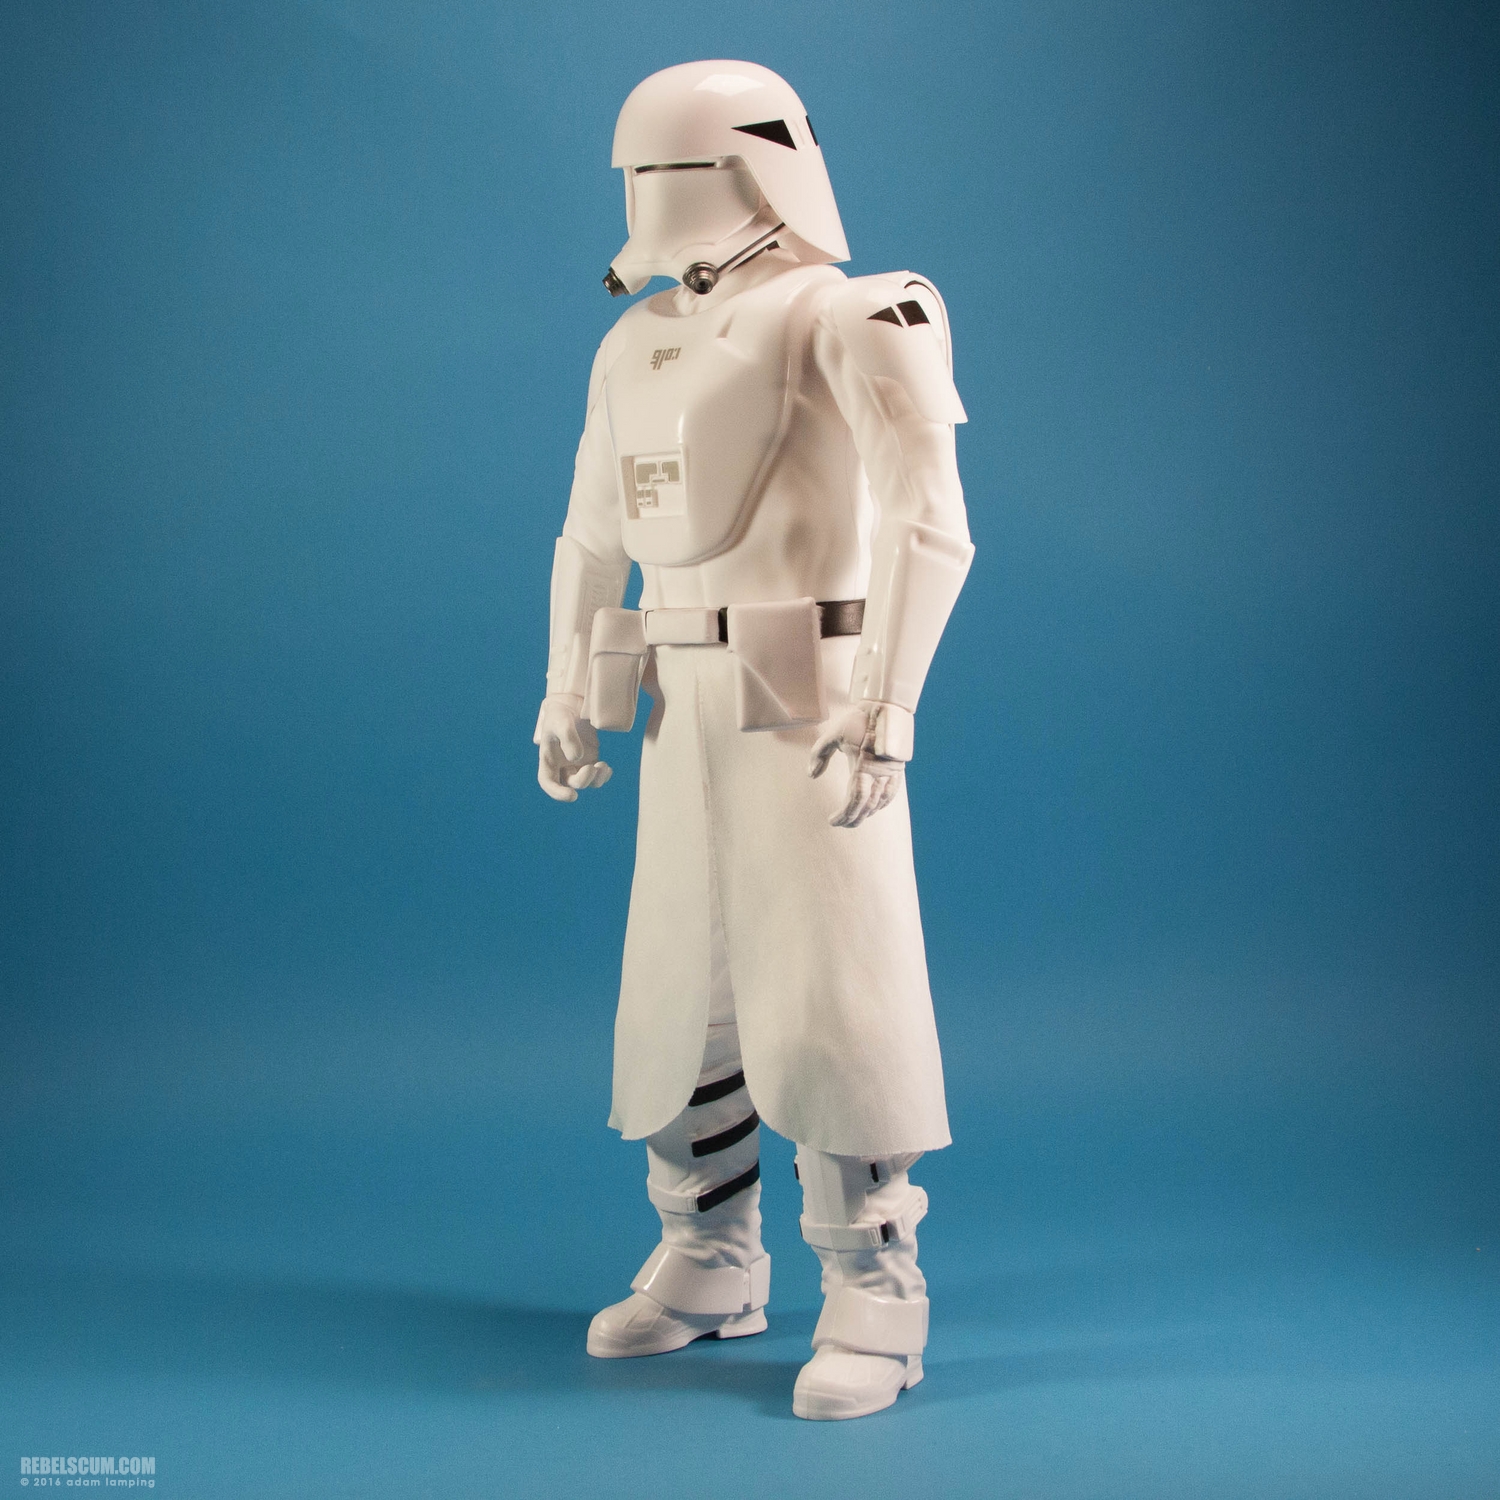 jakks-pacific-first-order-snowtrooper-18-inch-figure-011.jpg